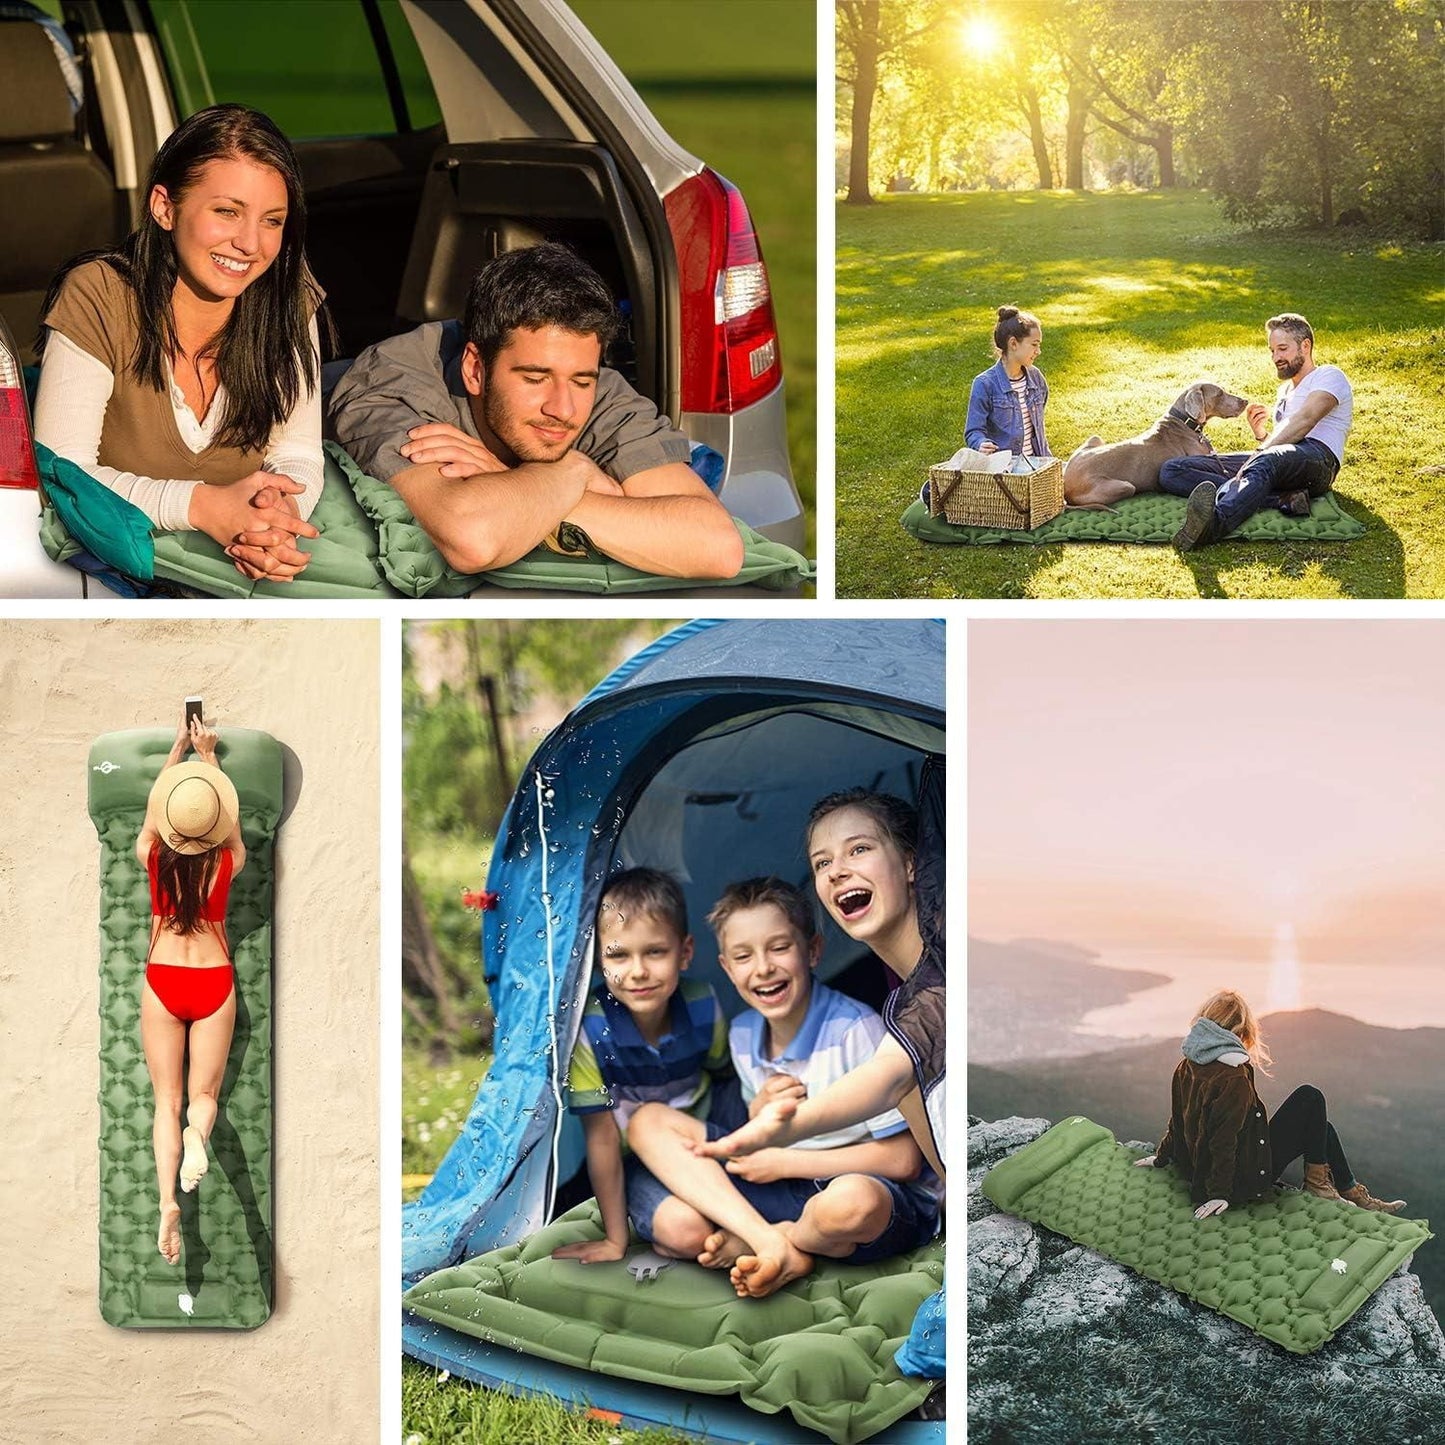 Inflatable Sleeping Pad for Camping, Ultralight Waterproof Sleeping Mattress w/Pillow